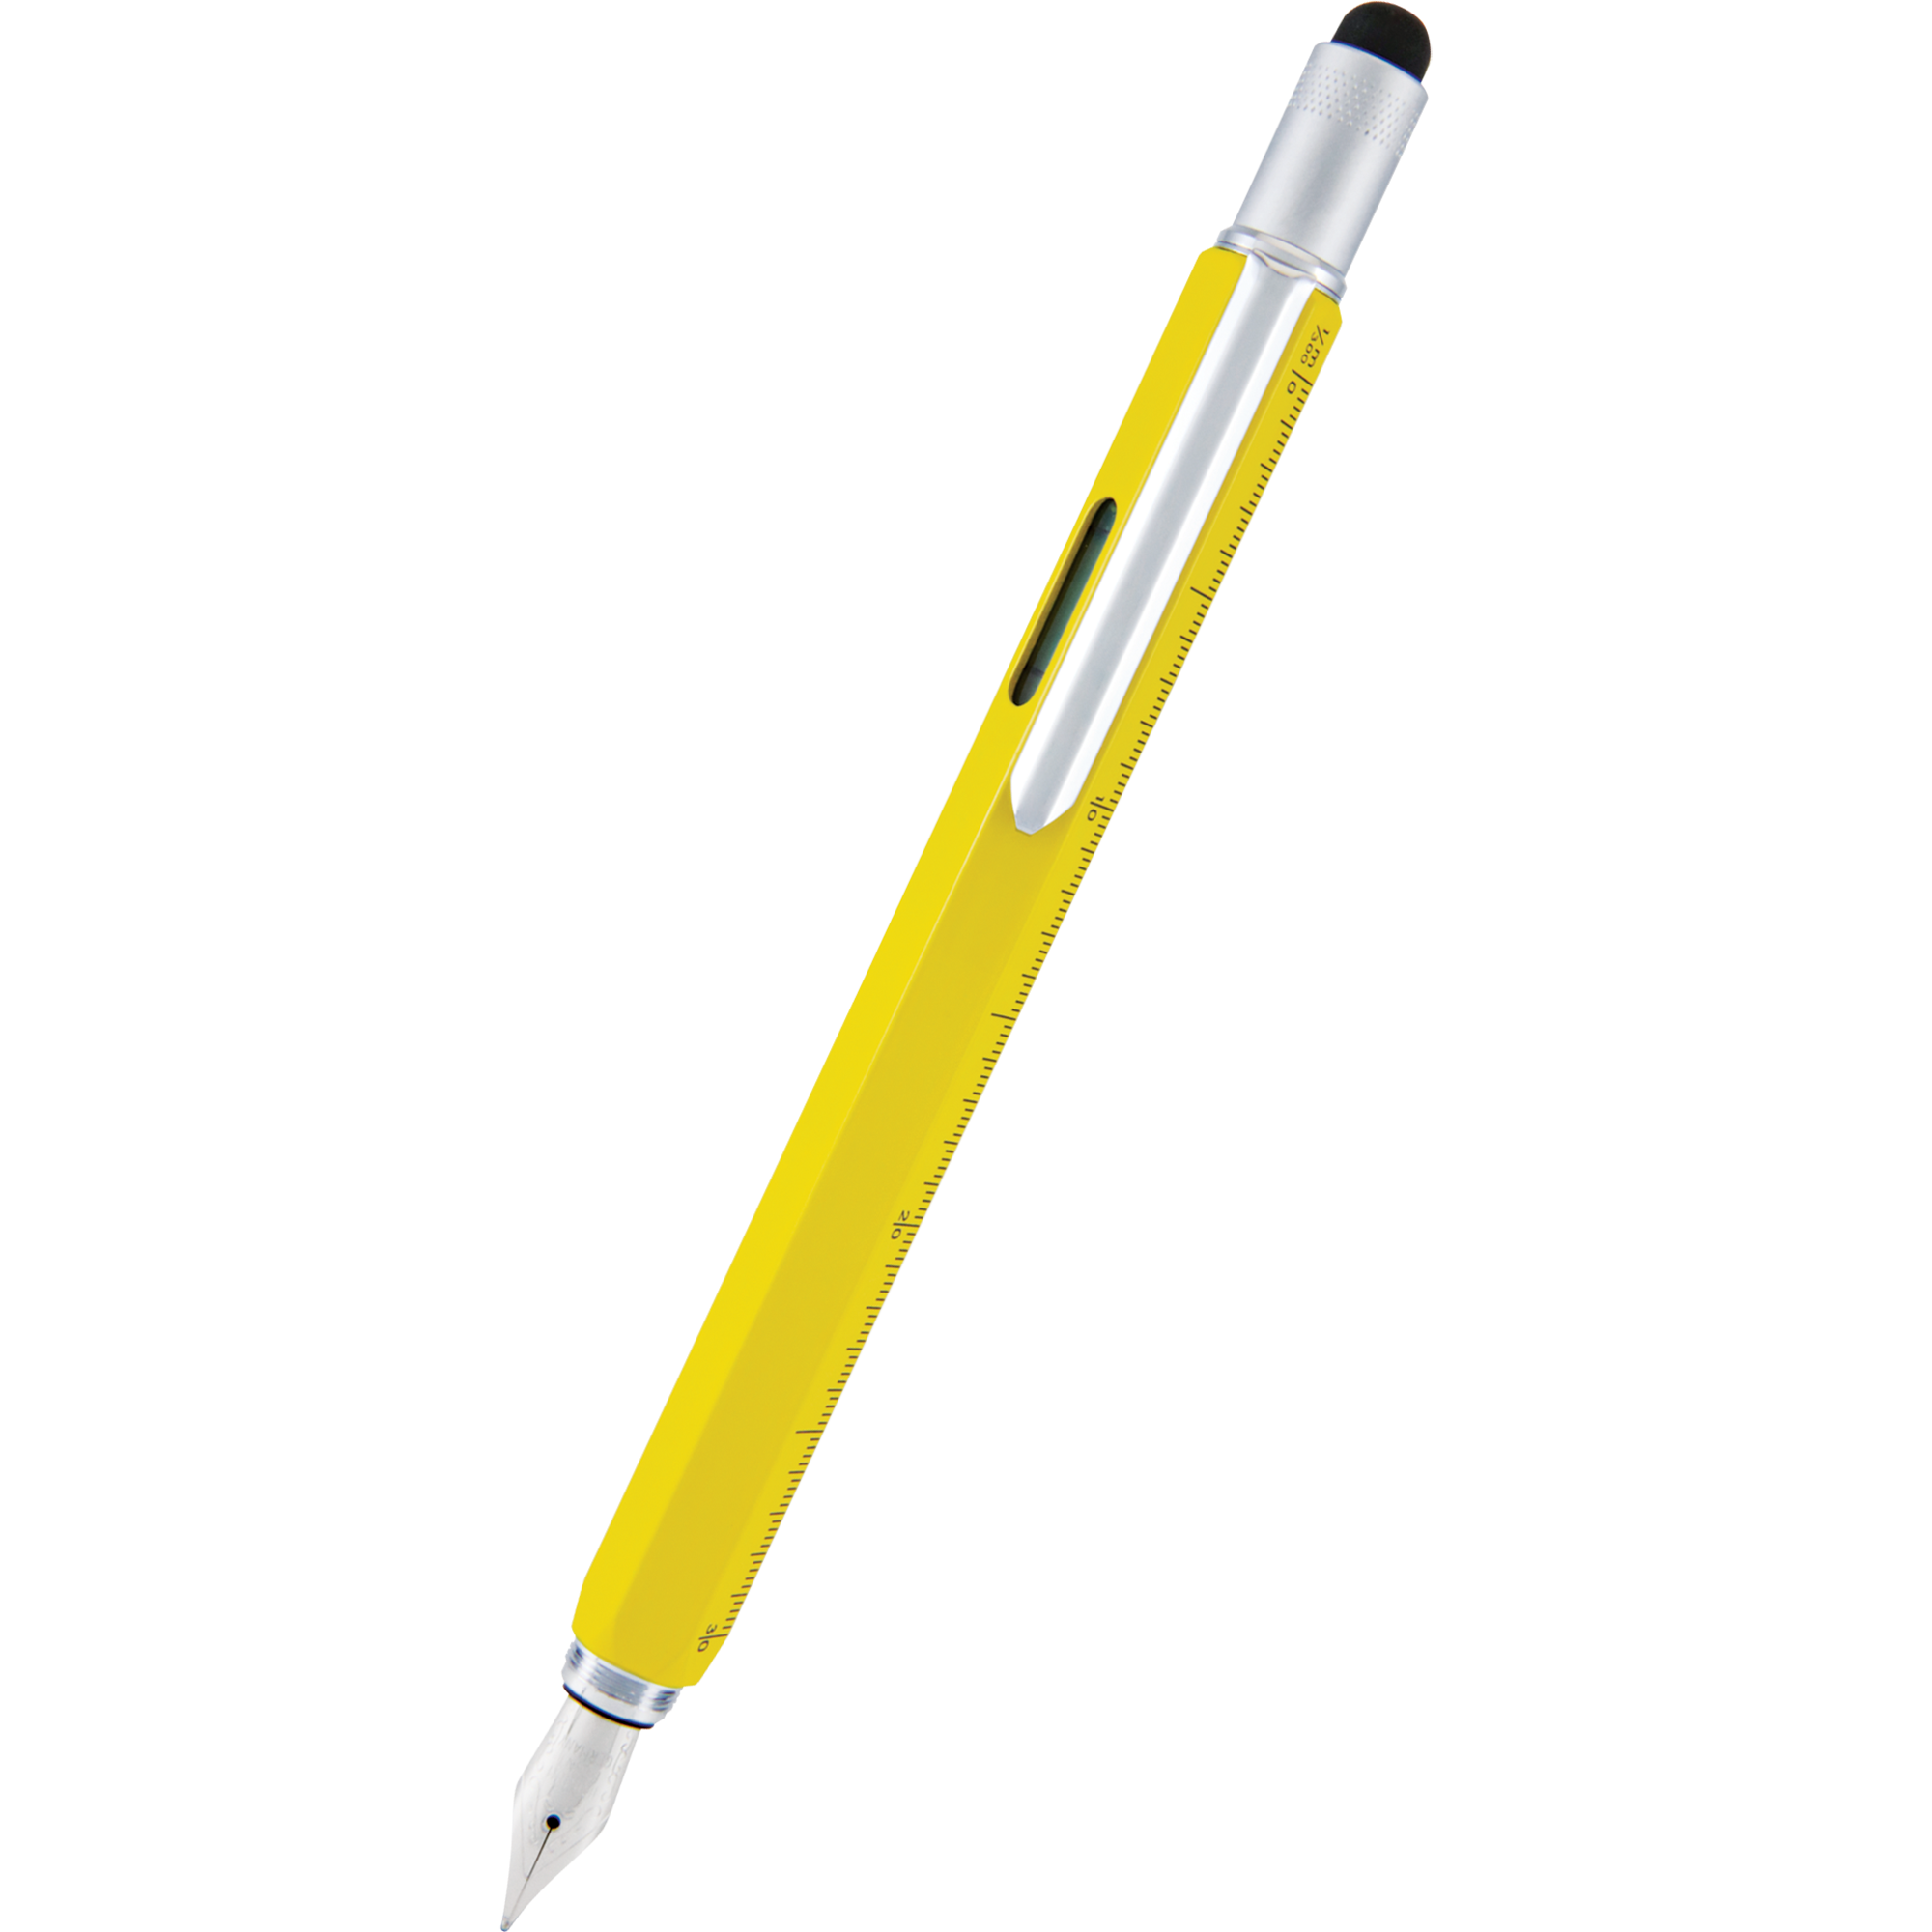 Monteverde Tool Yellow Fountain Pen-Pen Boutique Ltd